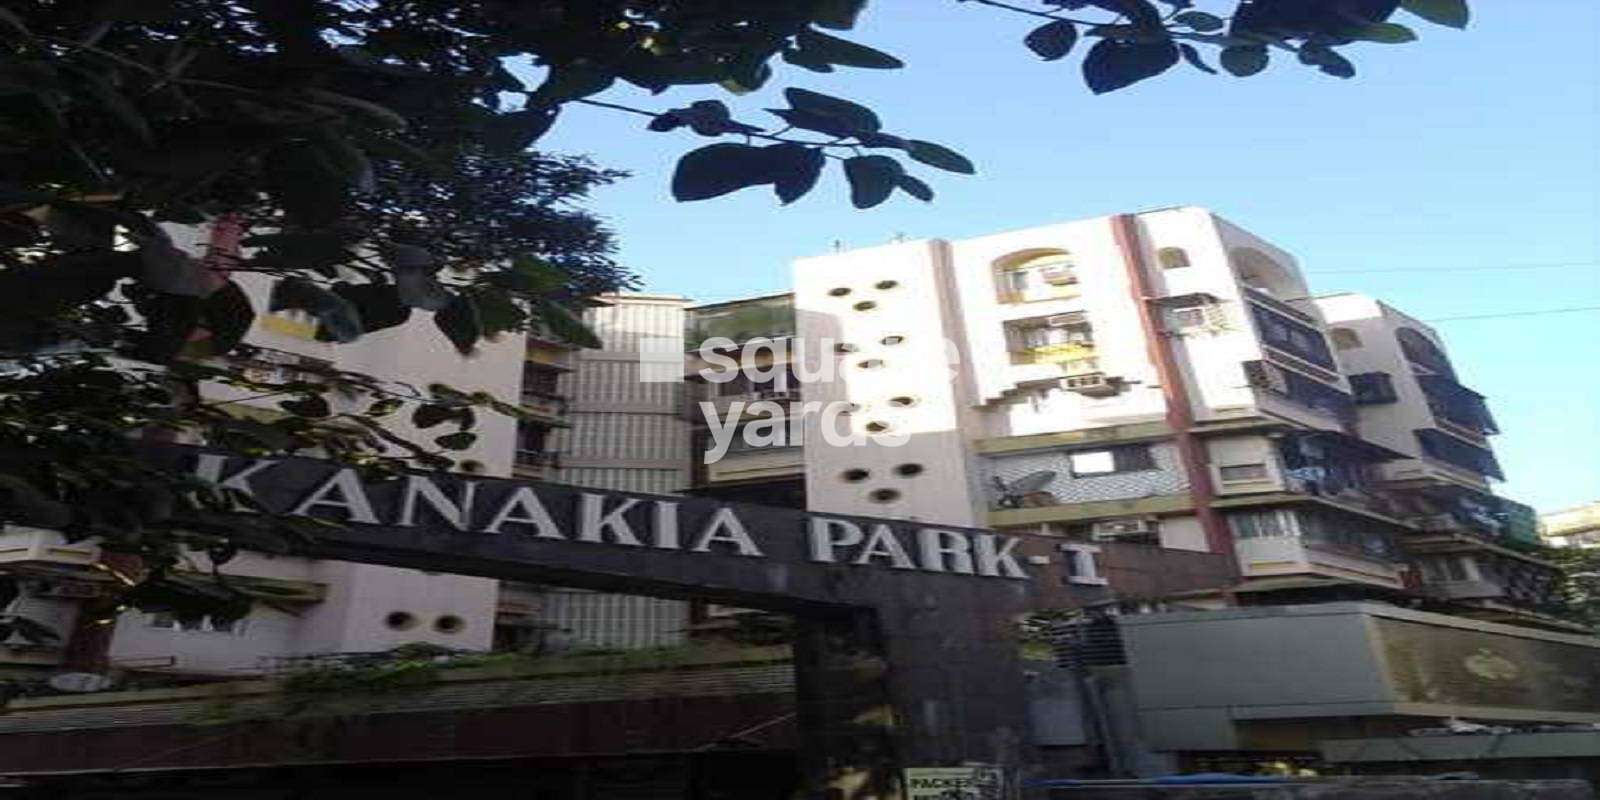 Kanakia Park Apartment Cover Image